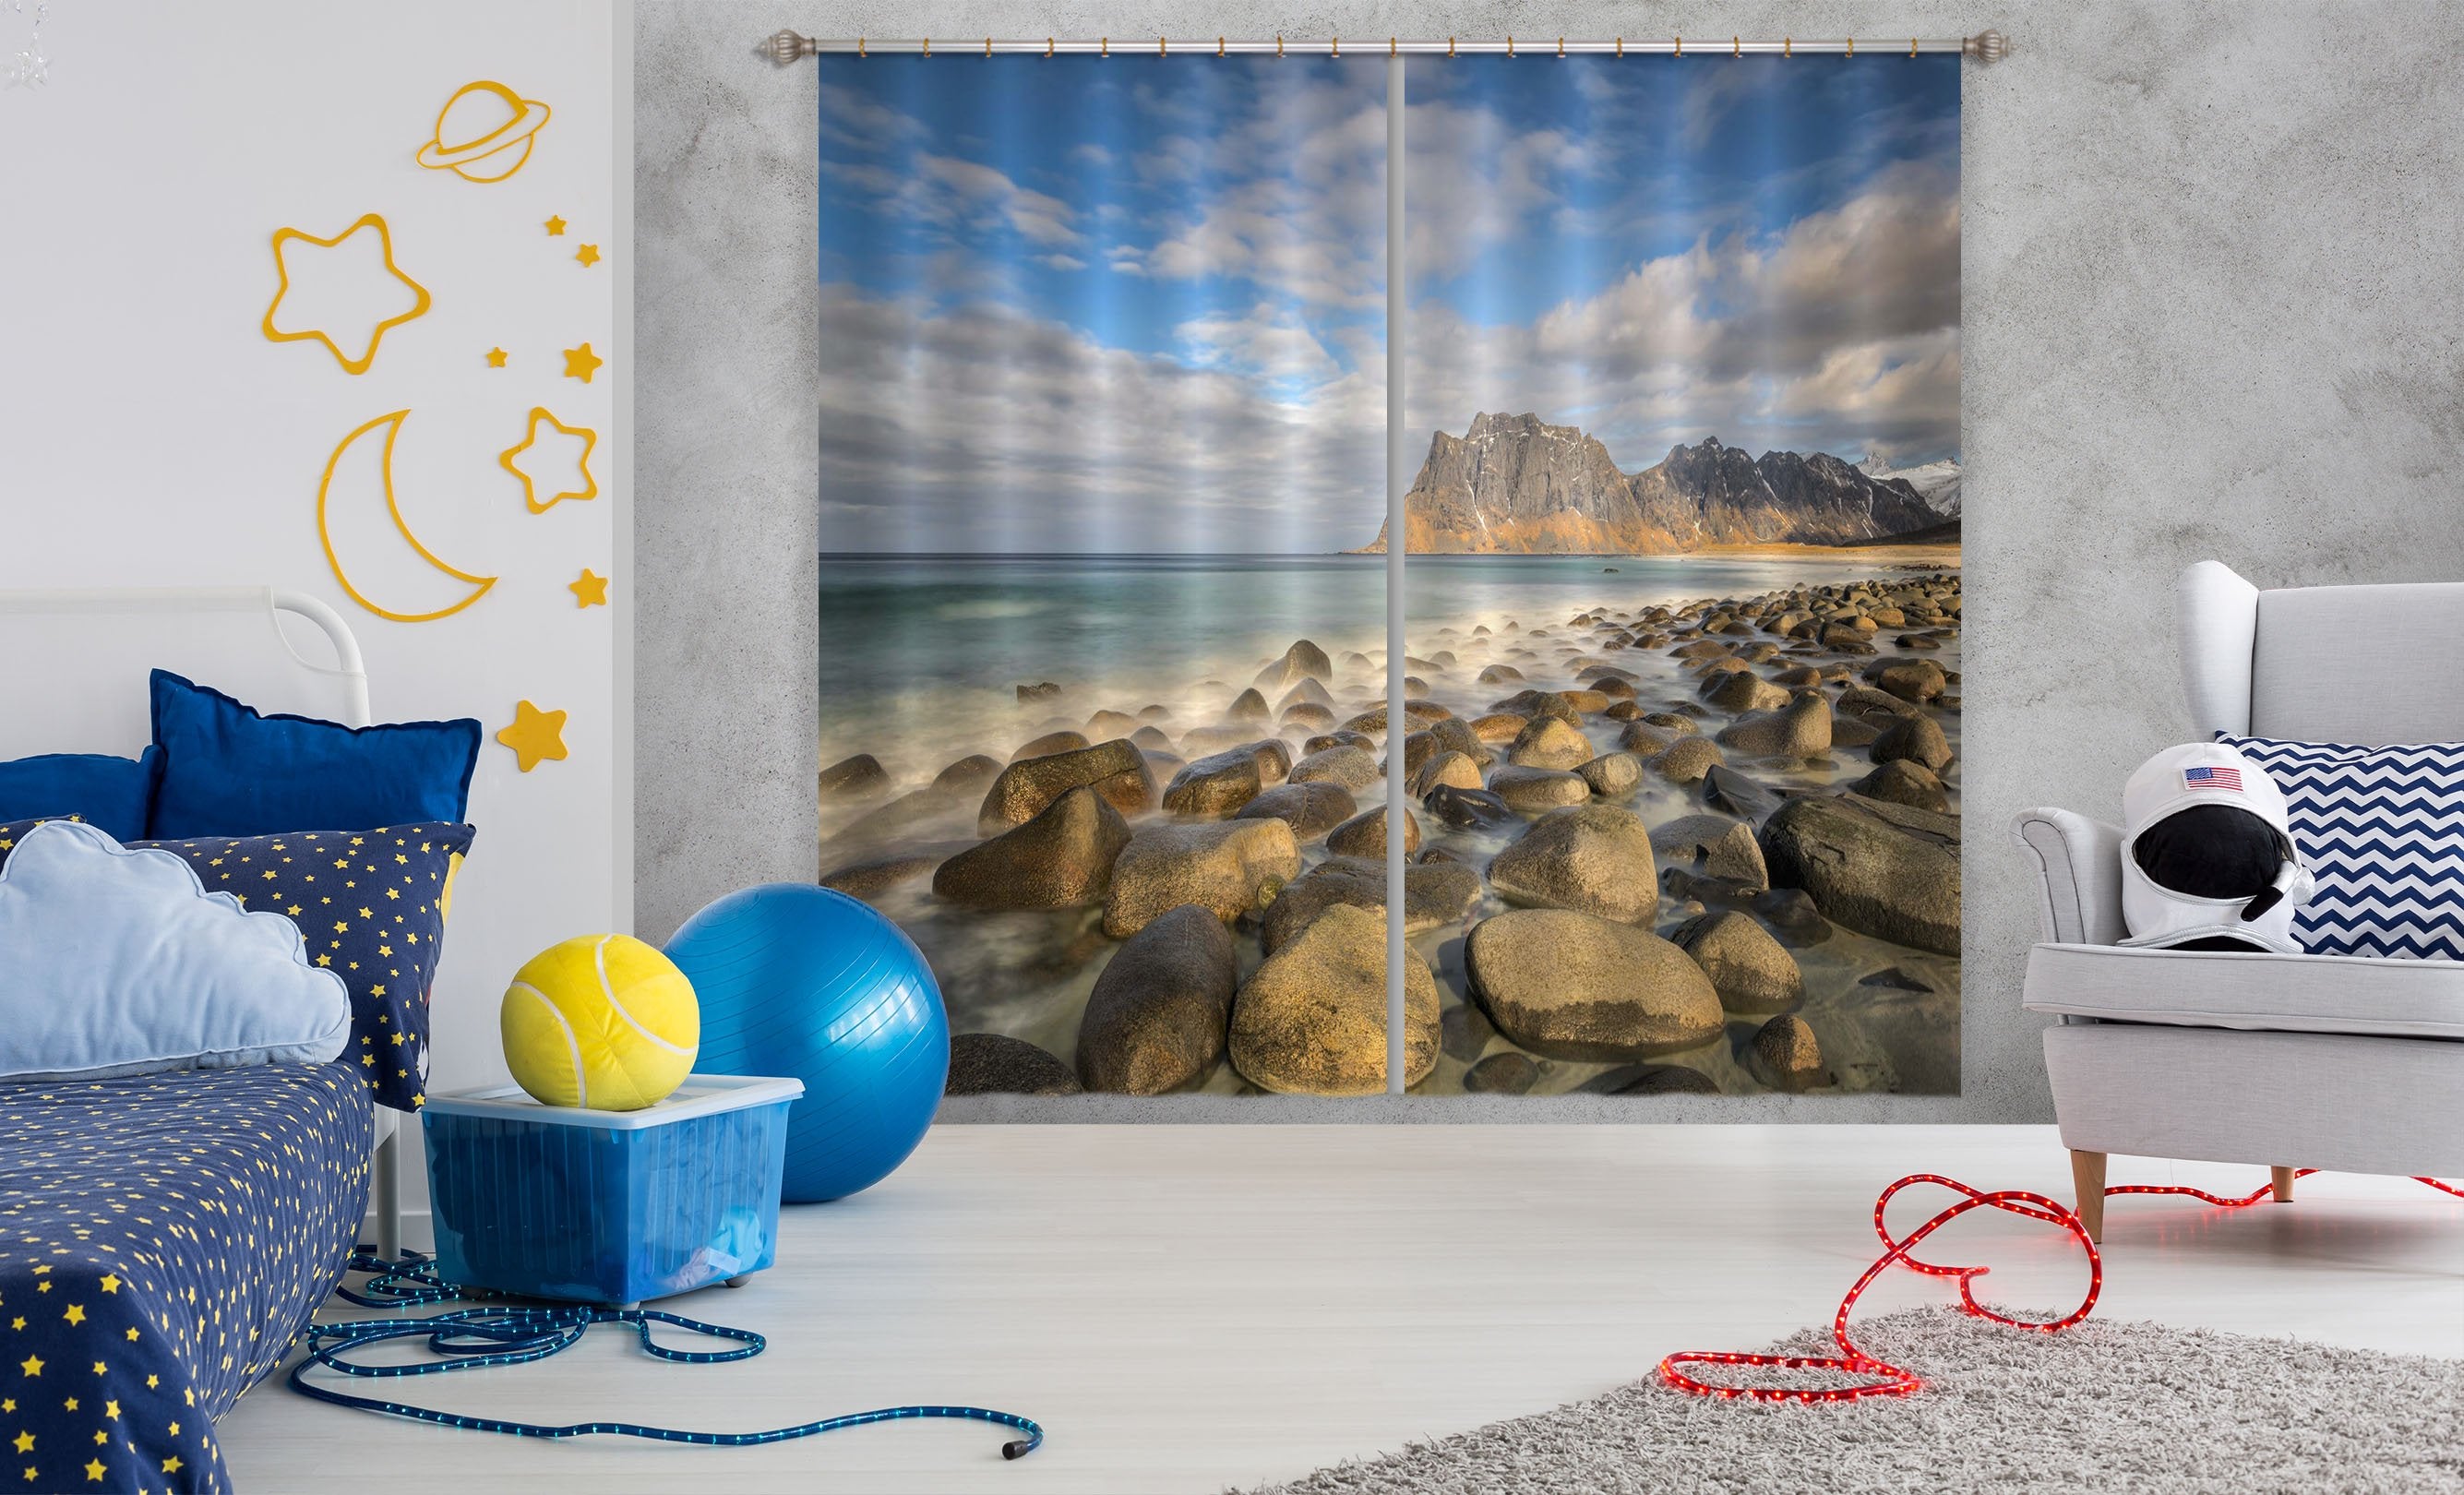 3D Beach Stones 168 Marco Carmassi Curtain Curtains Drapes Wallpaper AJ Wallpaper 